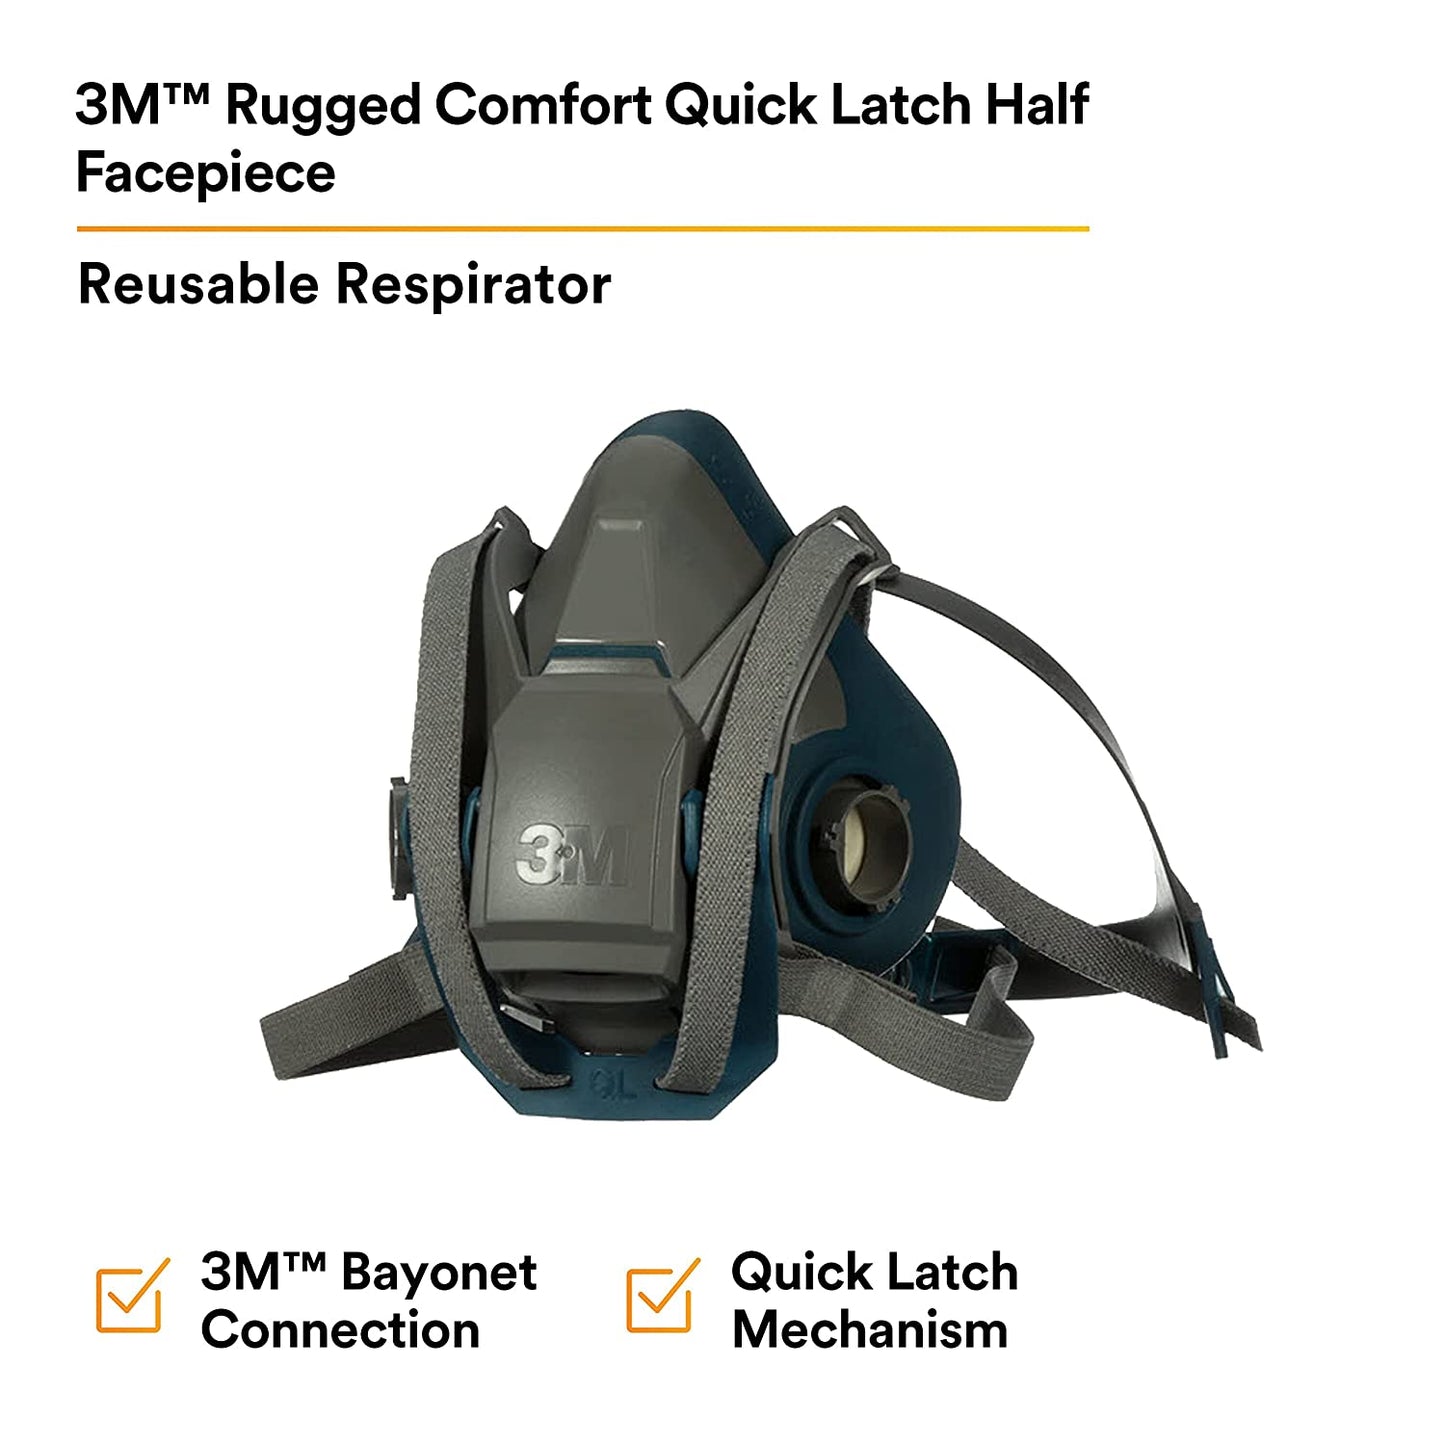 3M Quick Latch Half Facepiece Reusable Respirator for Gases, Vapors, Dust